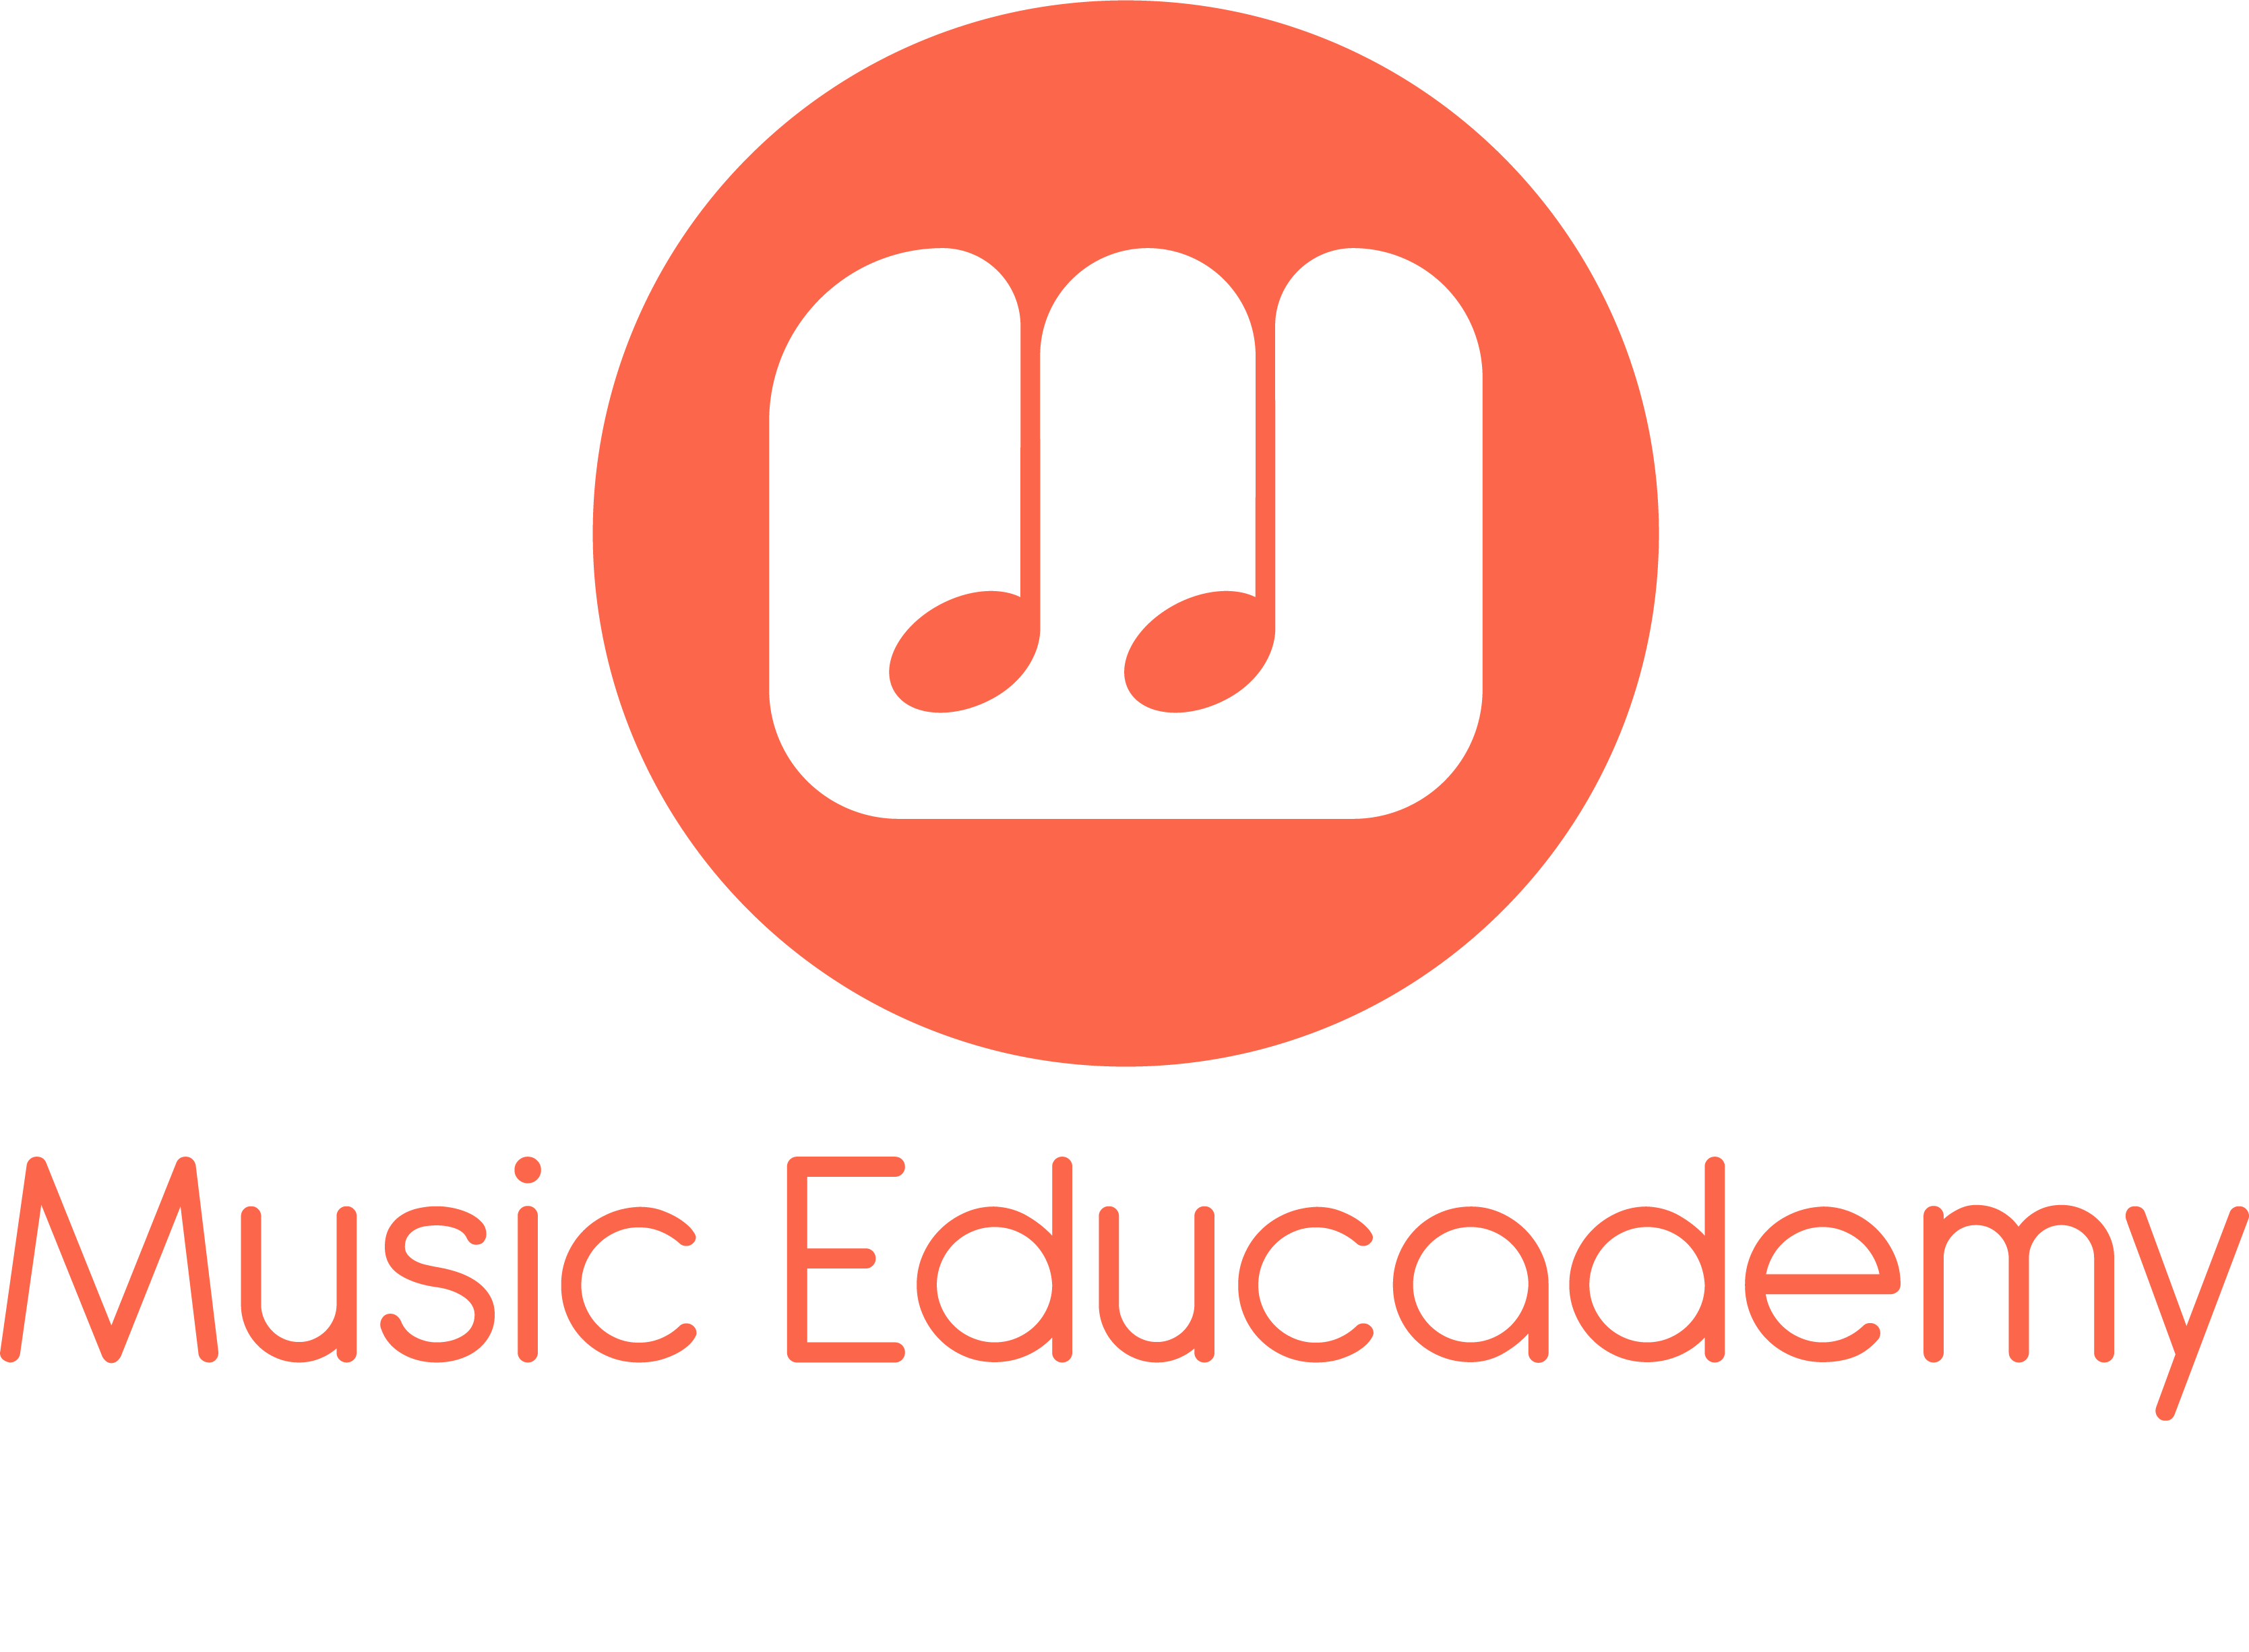 Music Educademy